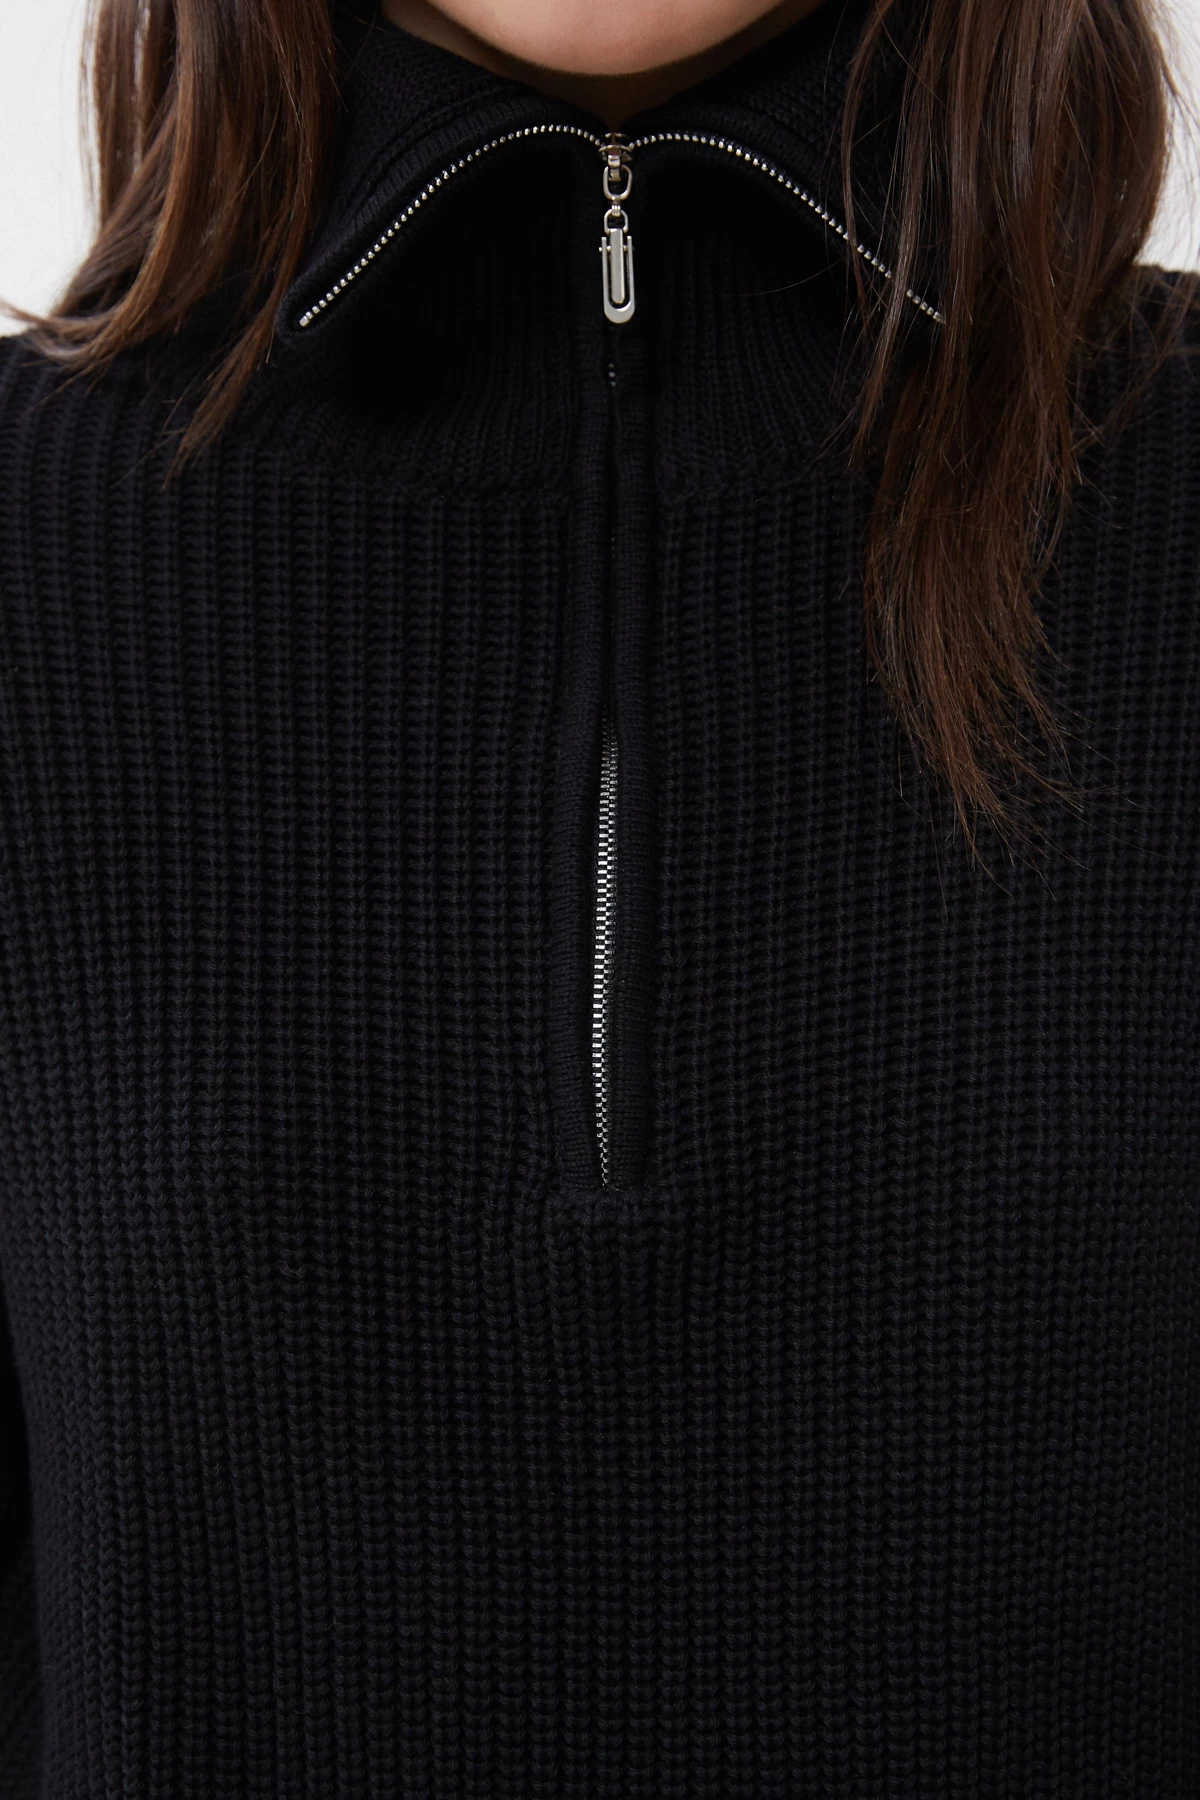 Black cotton zip-up knit sweater, photo 4